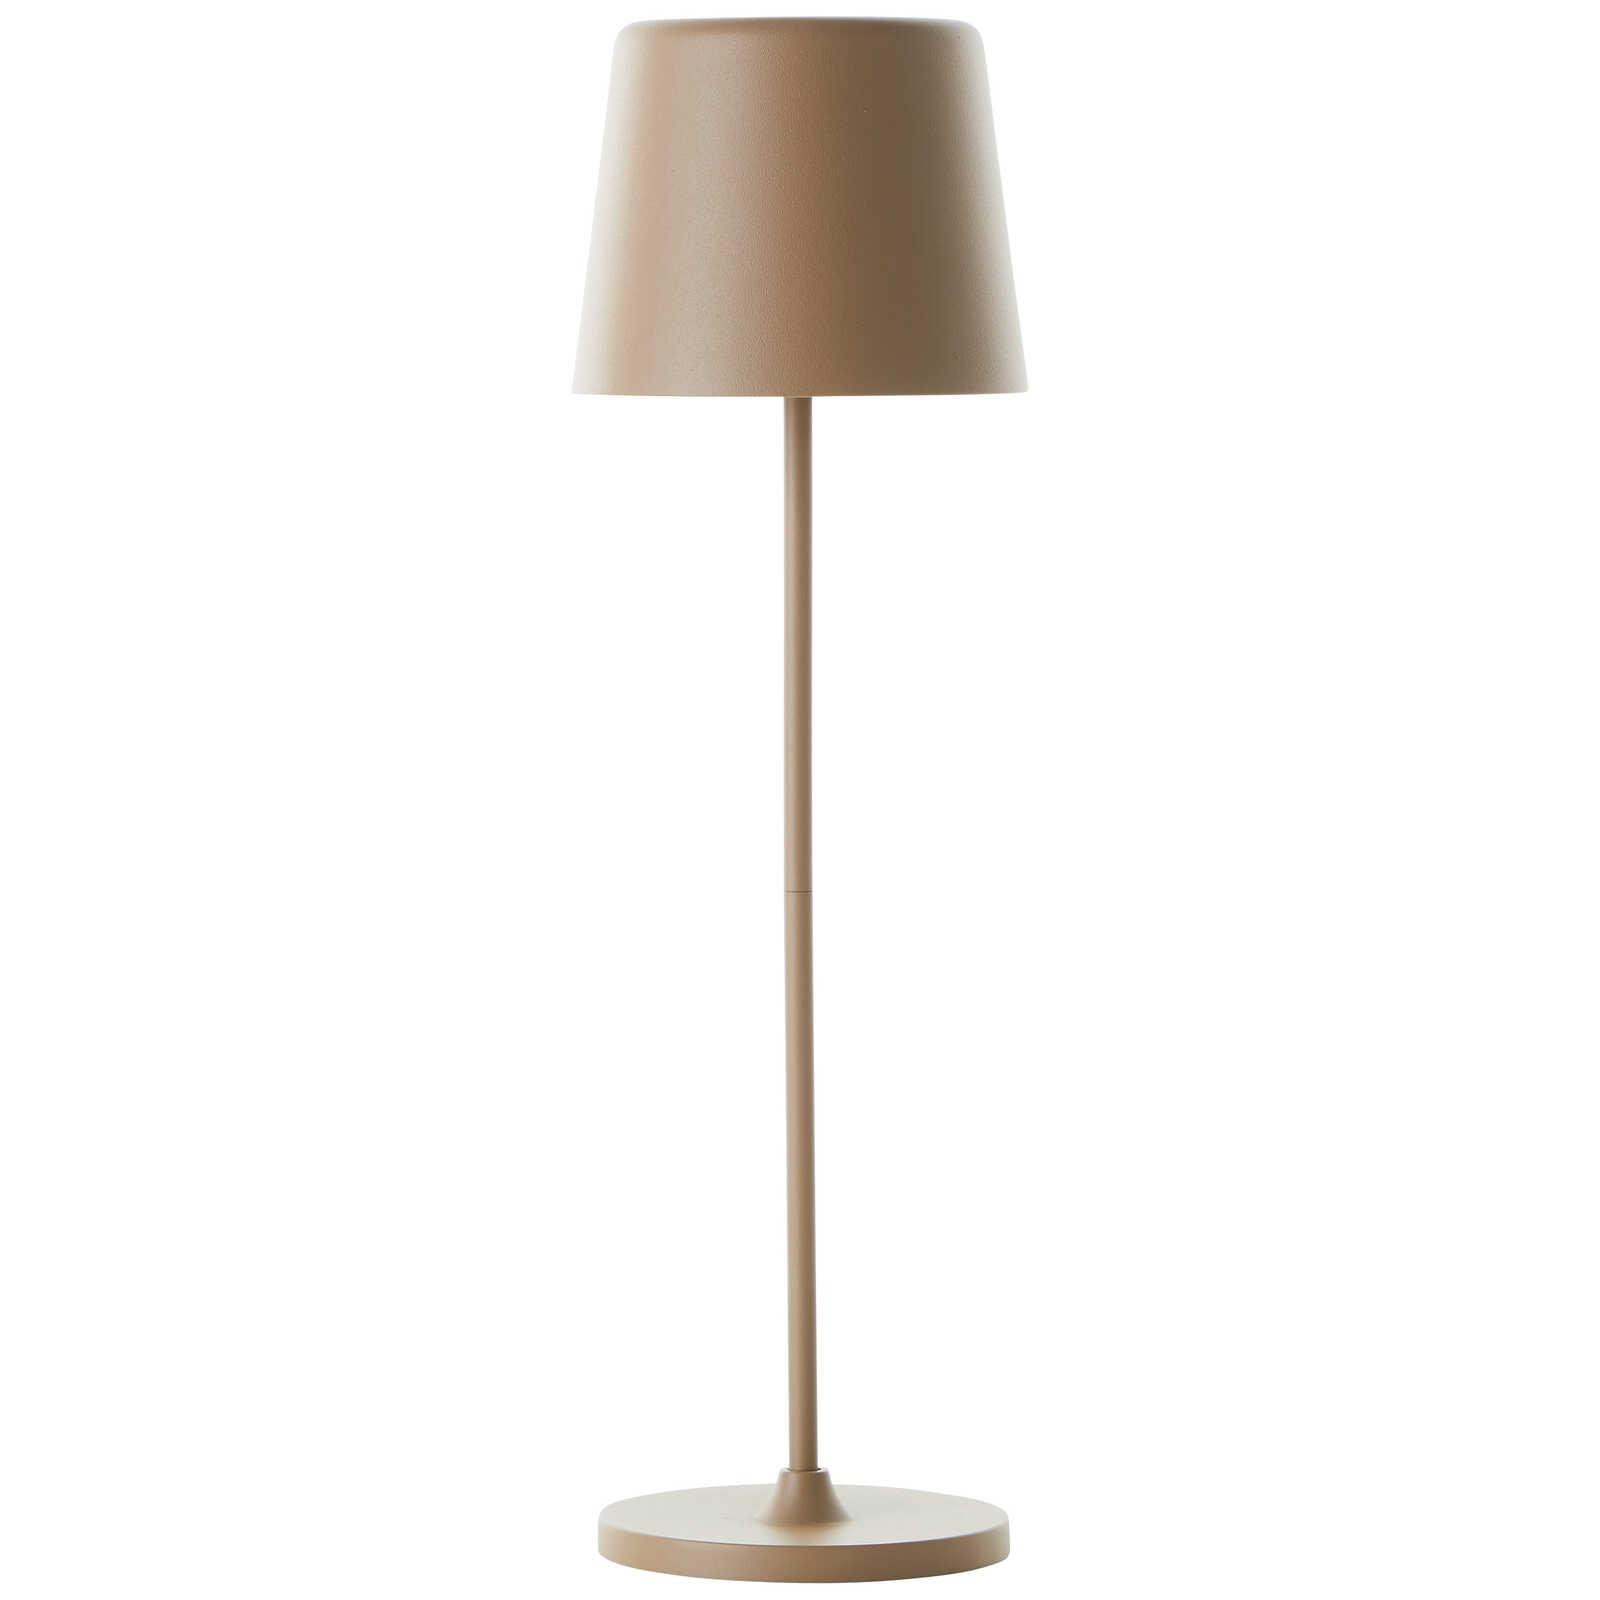             Metalen tafellamp - Cosy 3 - Bruin
        